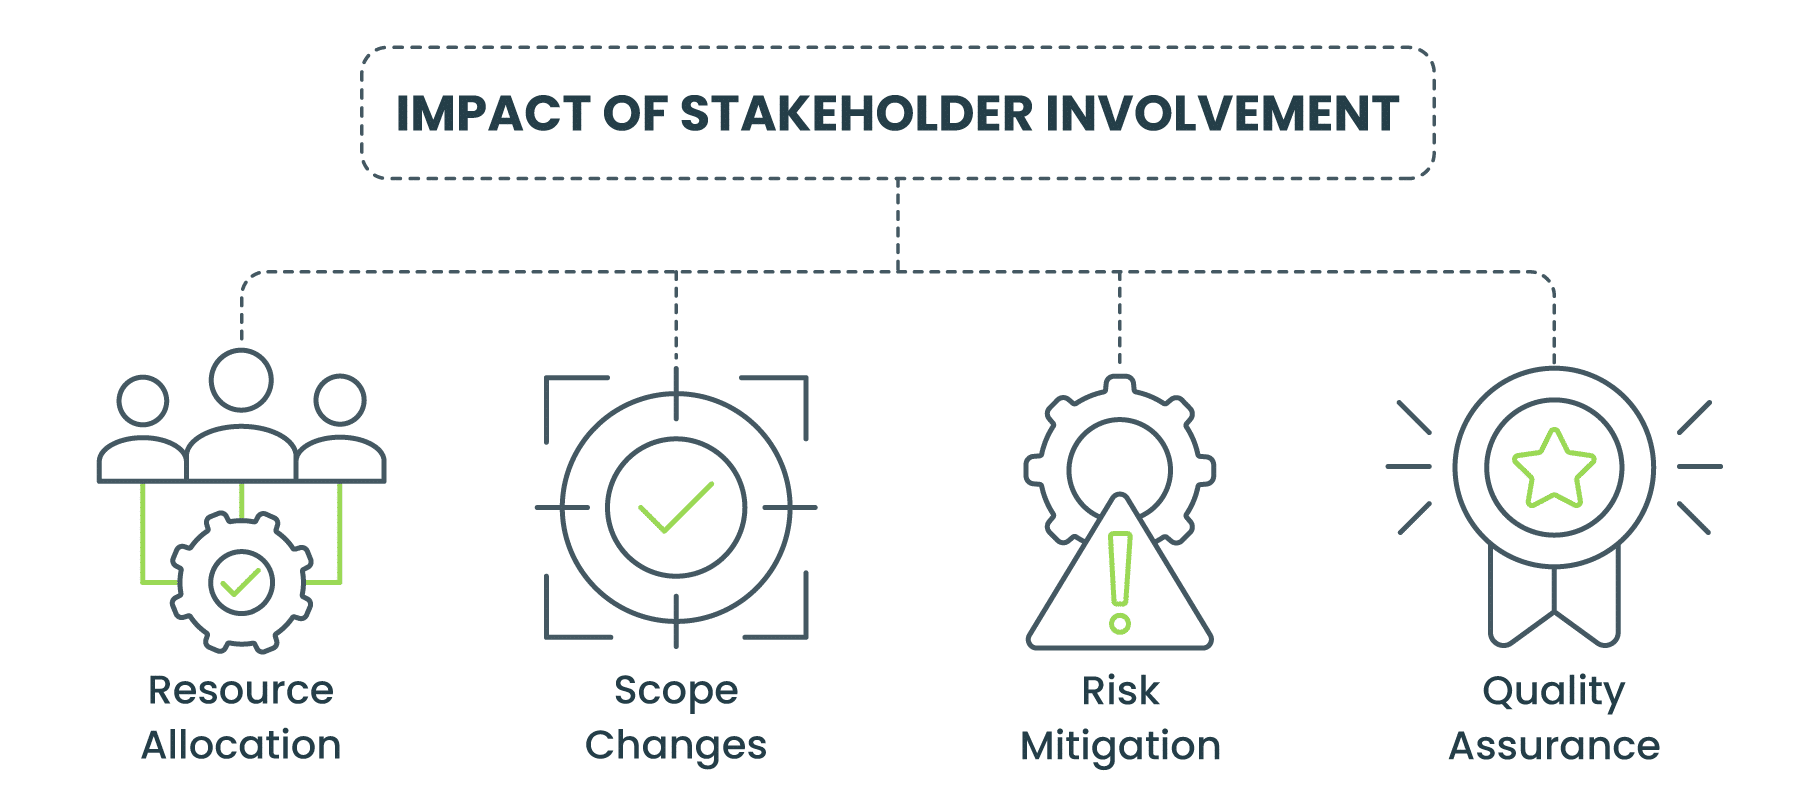 Impact of Stakeholder Involvement